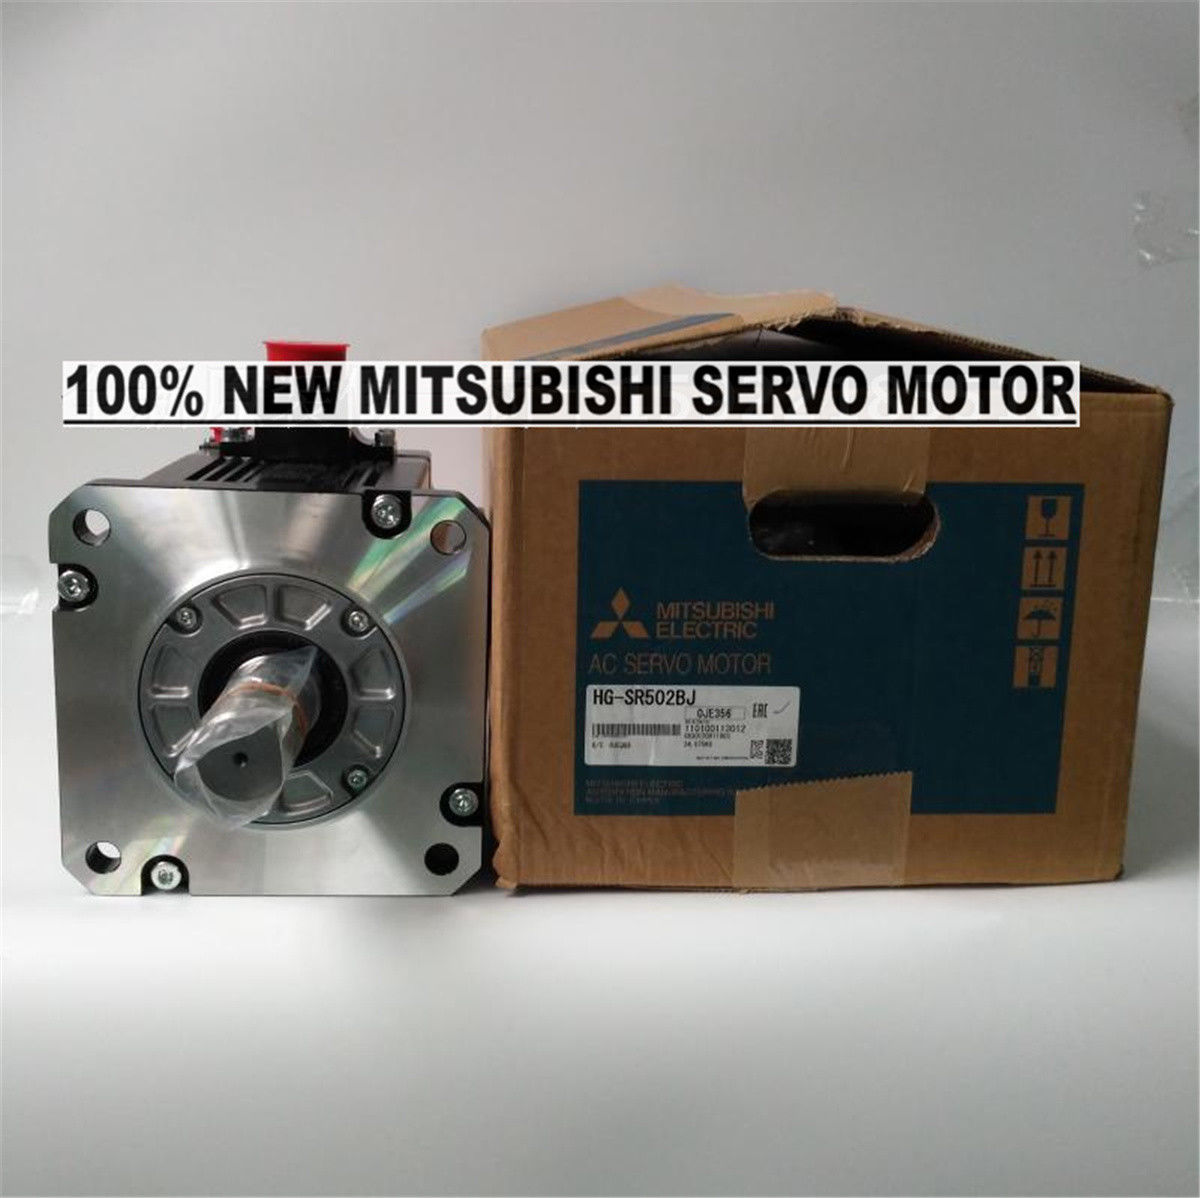 NEW Mitsubishi Servo Motor HG-SR502BJ in box HGSR502BJ